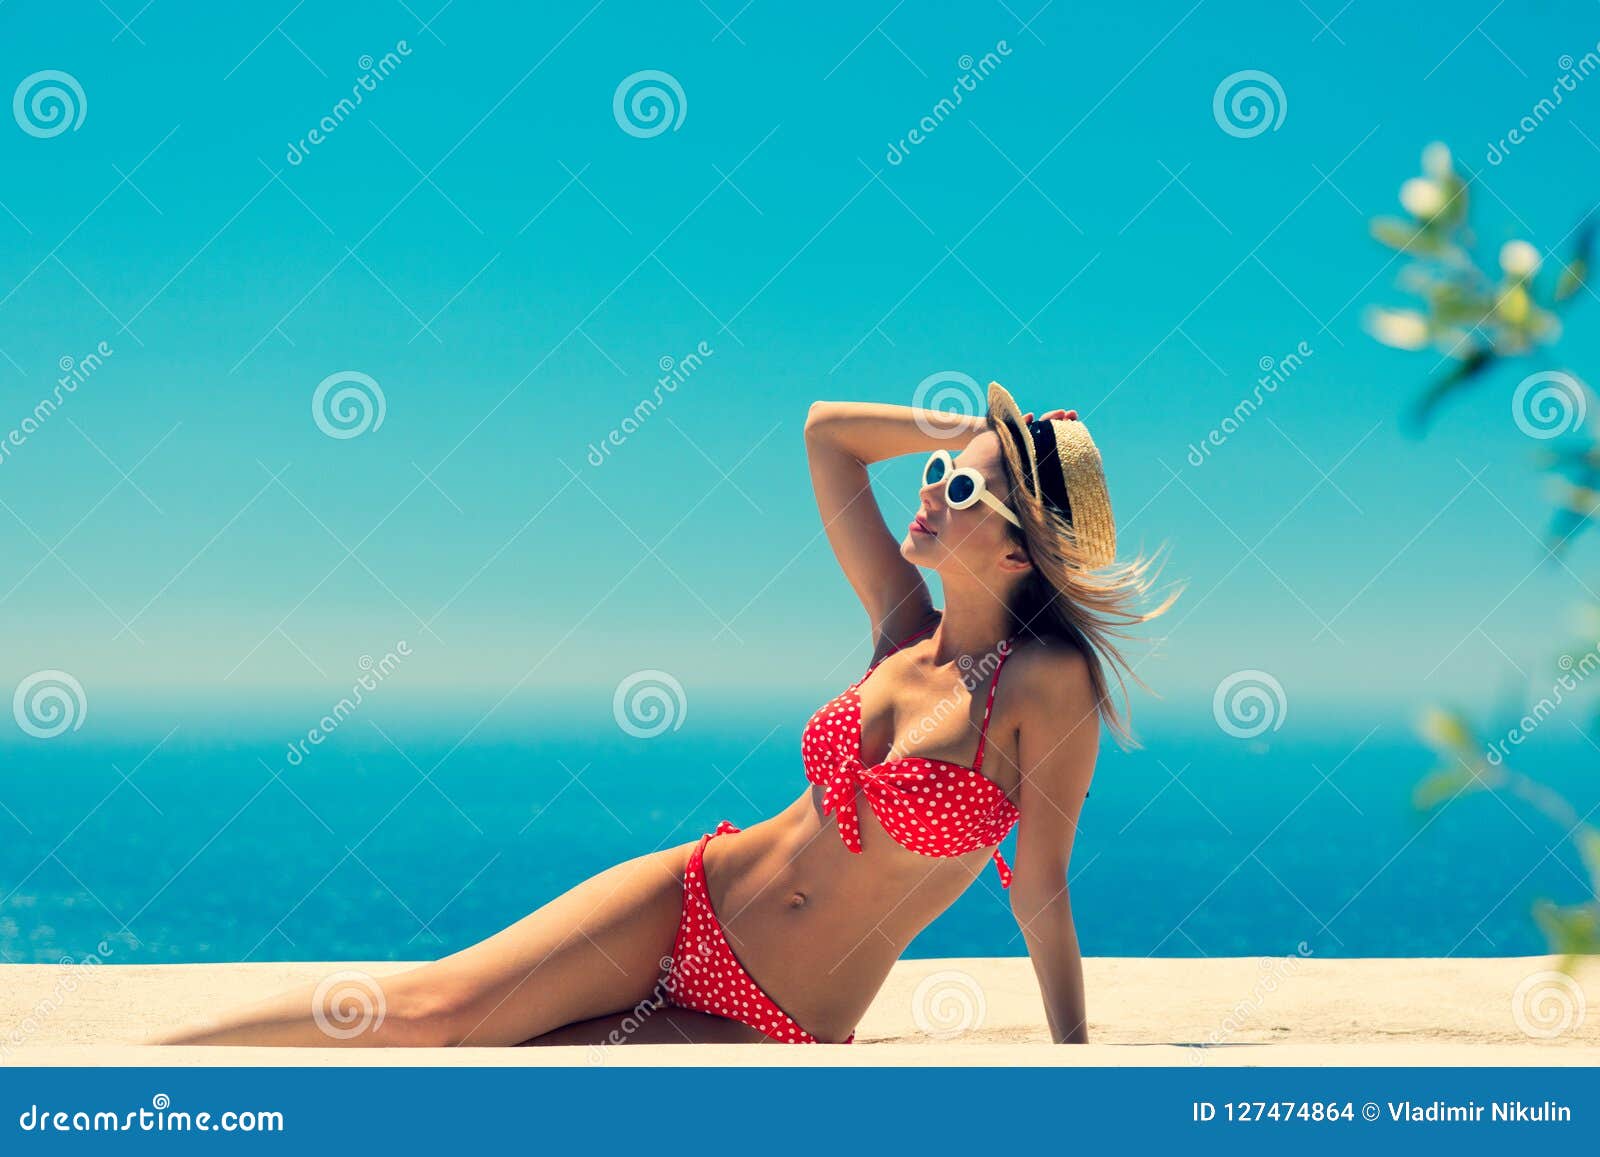 girl bikini blue sea sky background